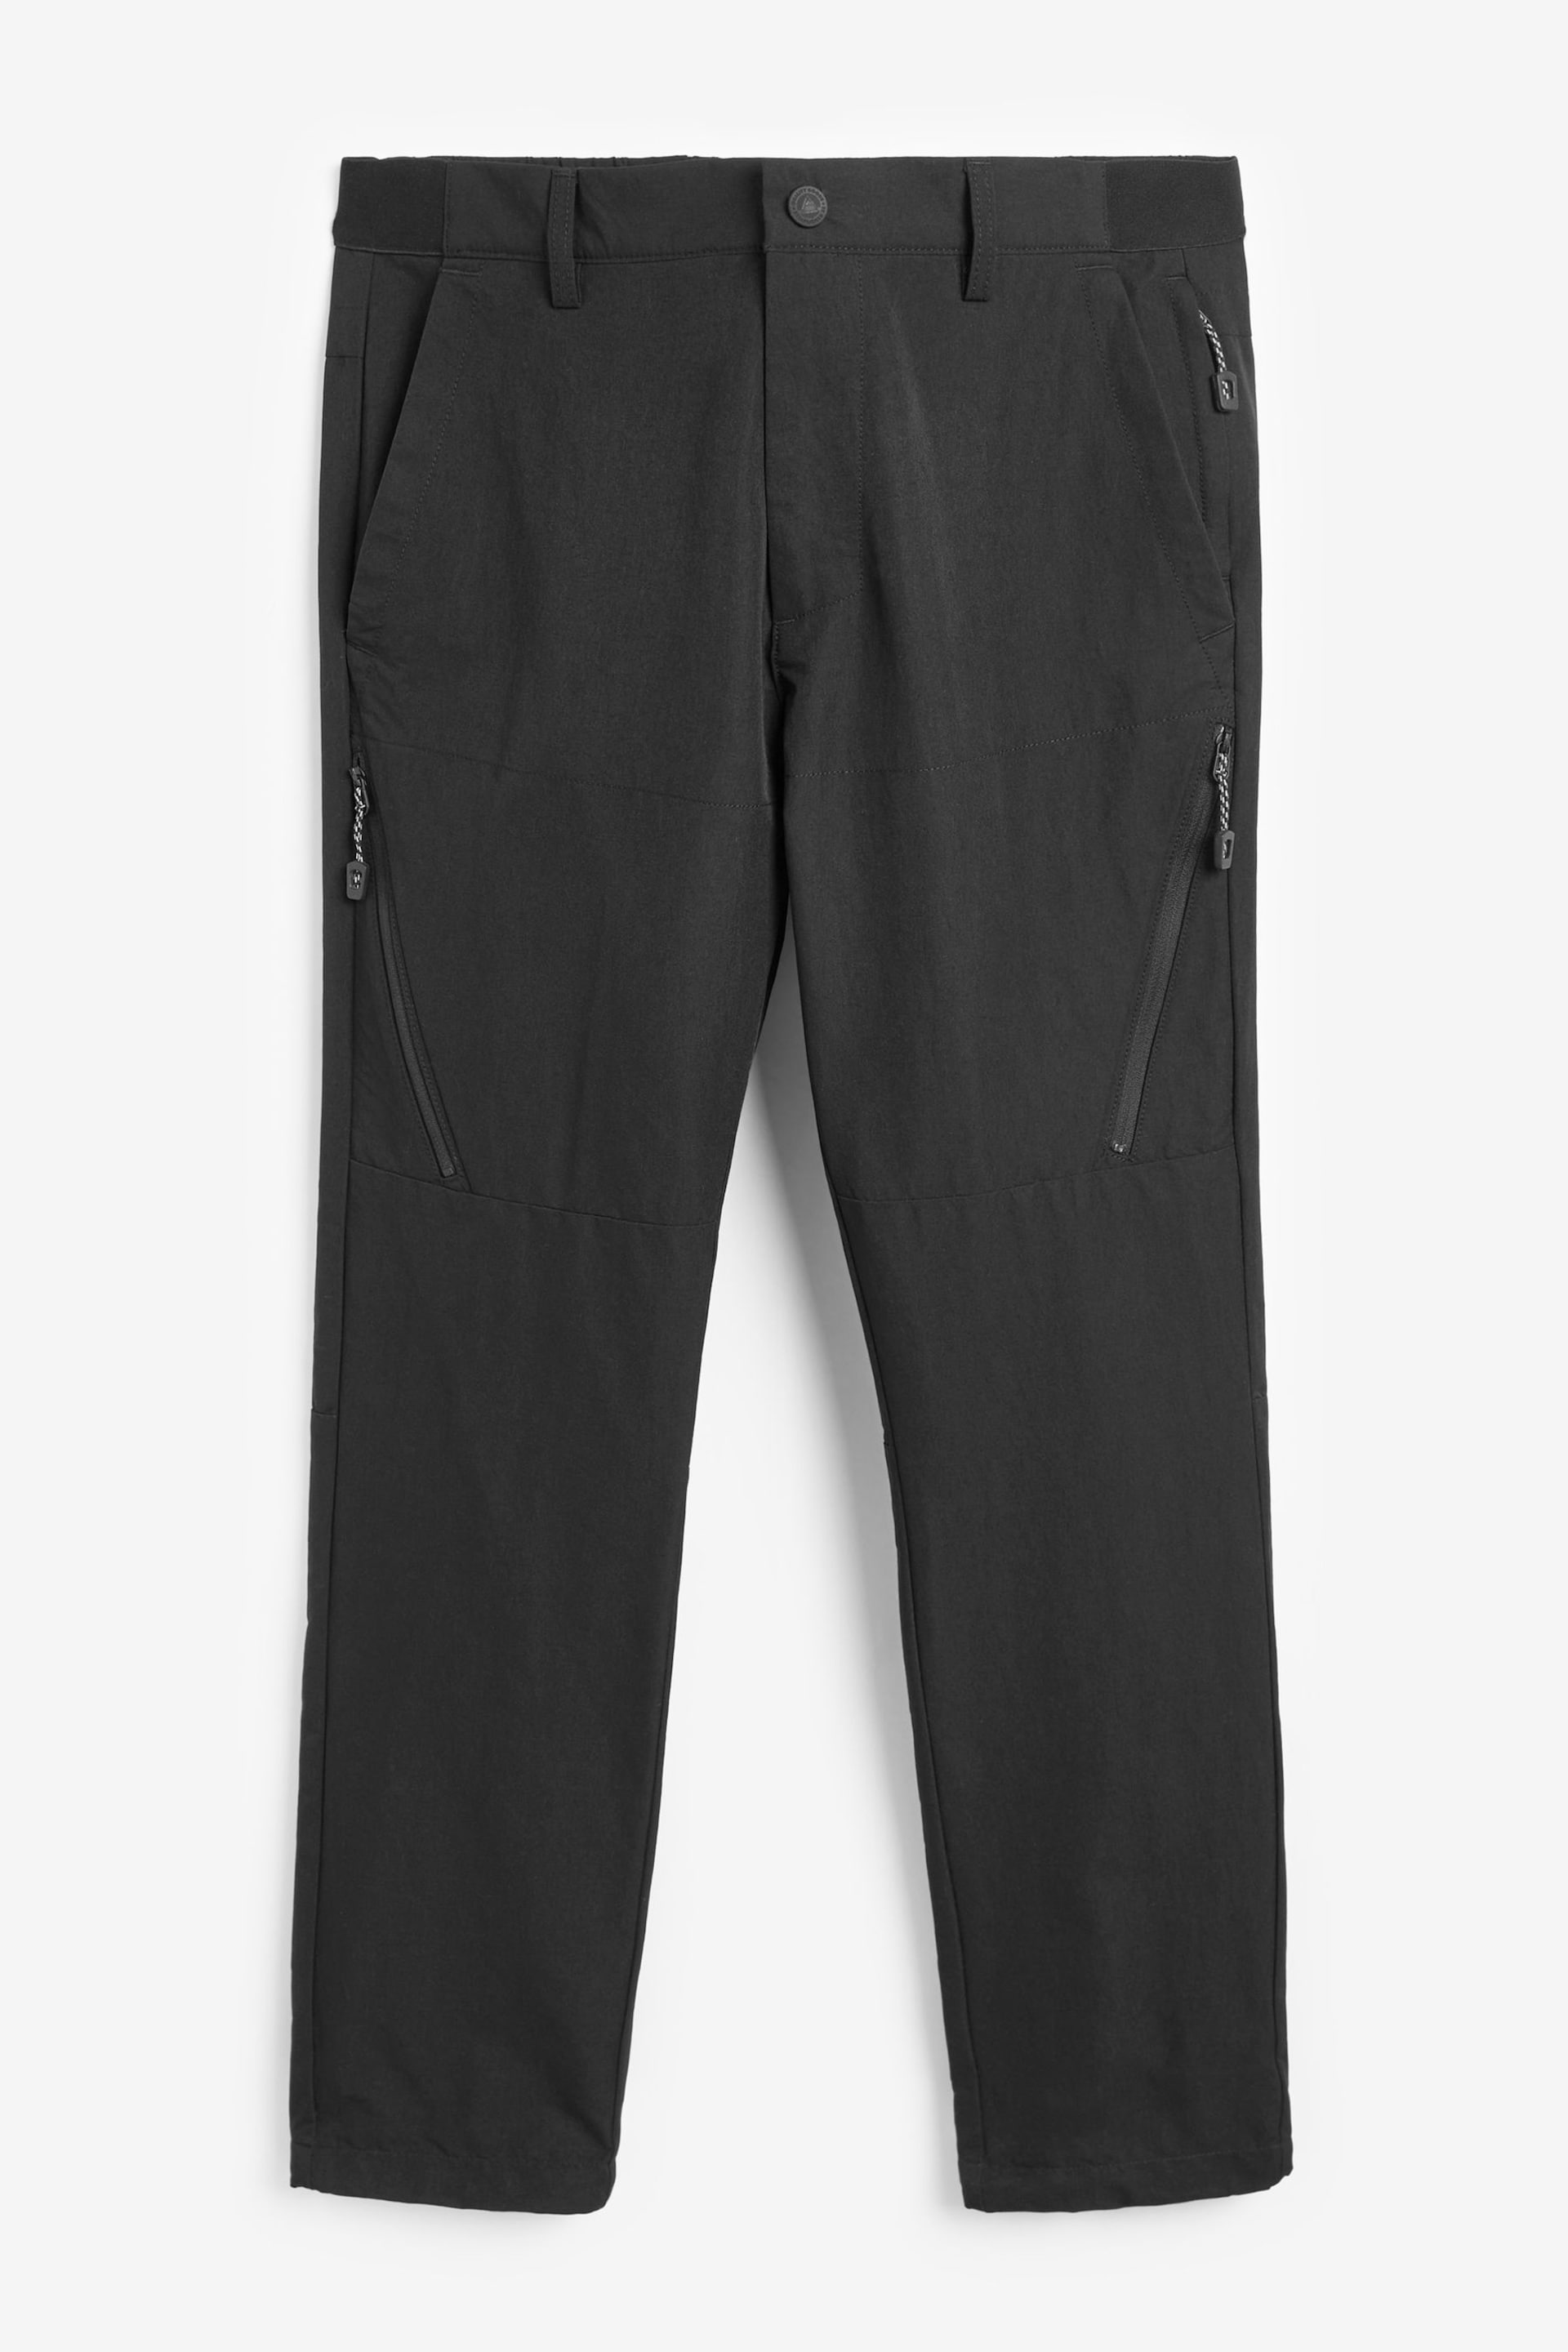 Black Slim Shower Resistant Walking Trousers - Image 4 of 5